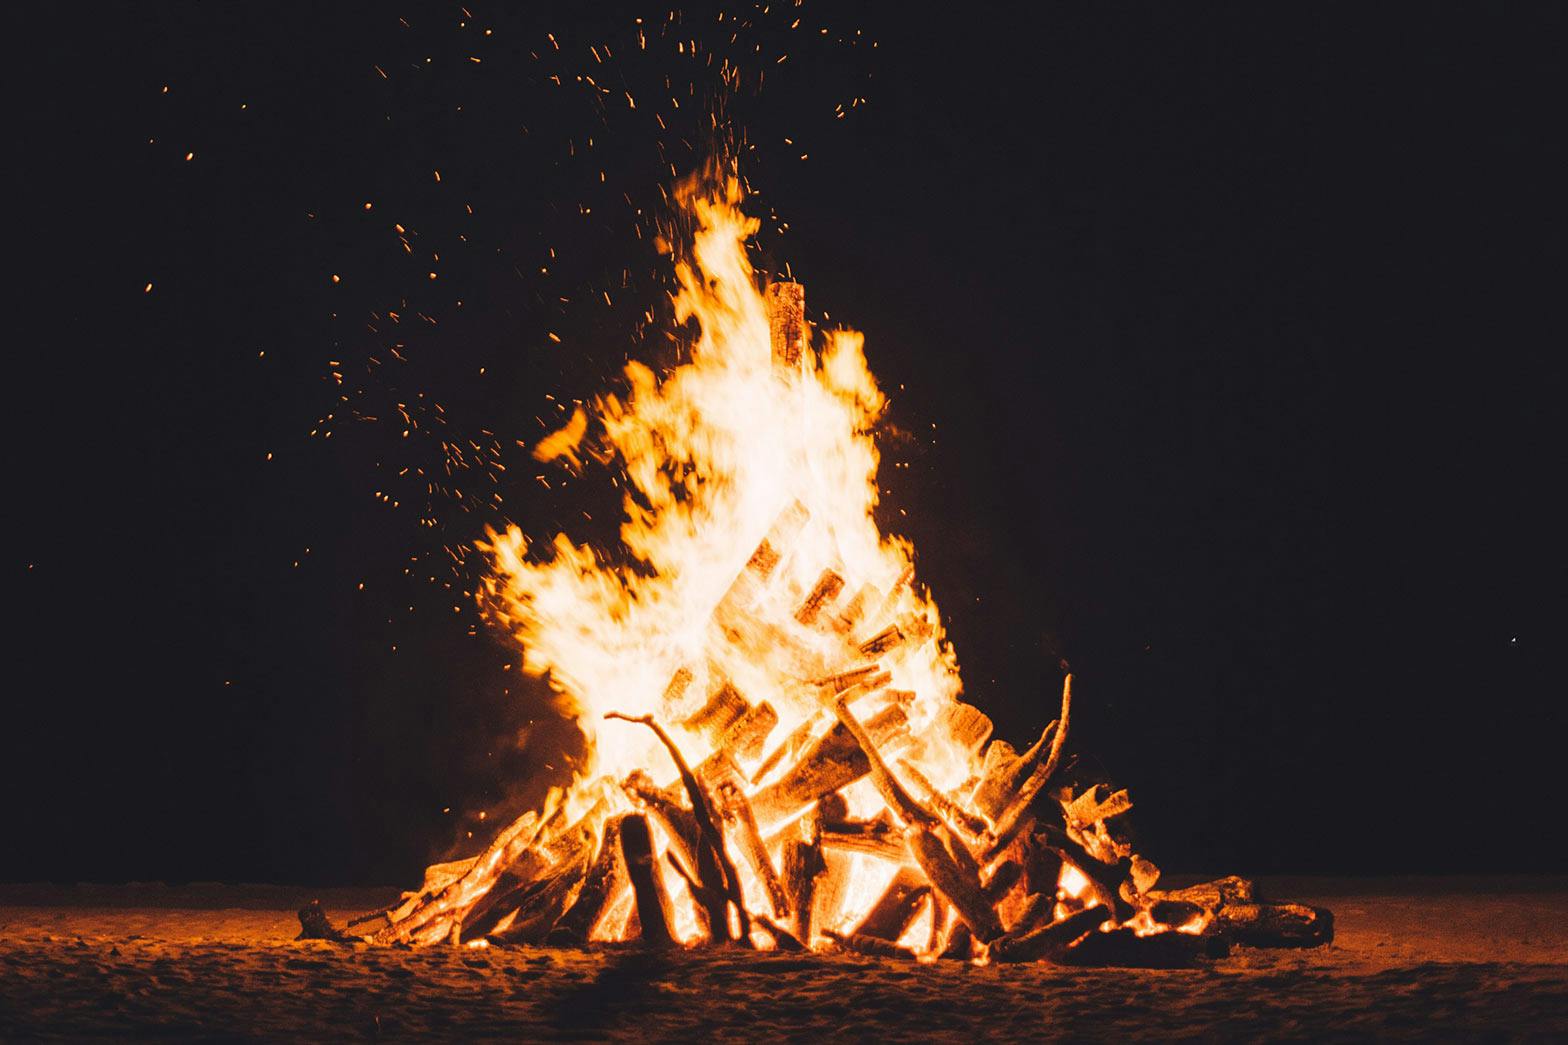 A photo of a bonfire at night